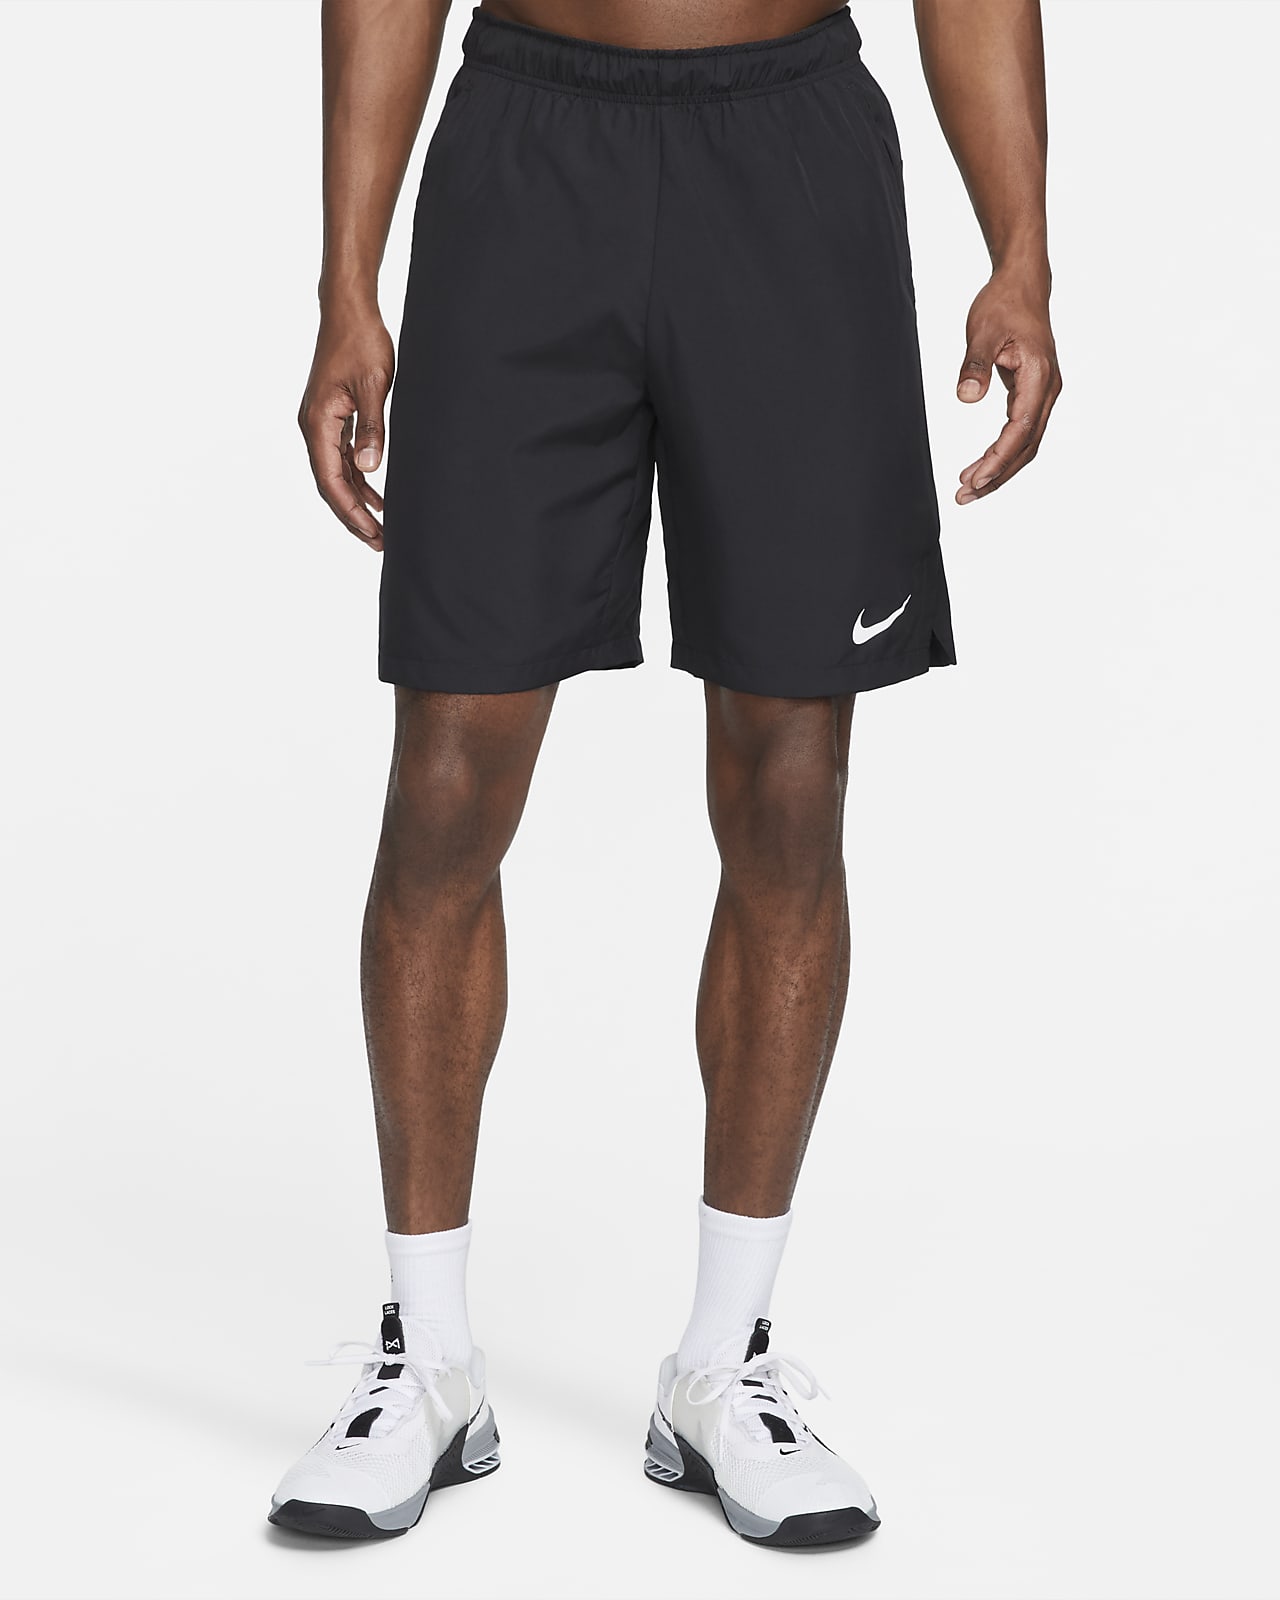 Nike Dri-FIT Pantalons curts de teixit Woven de 23 cm de training - Home